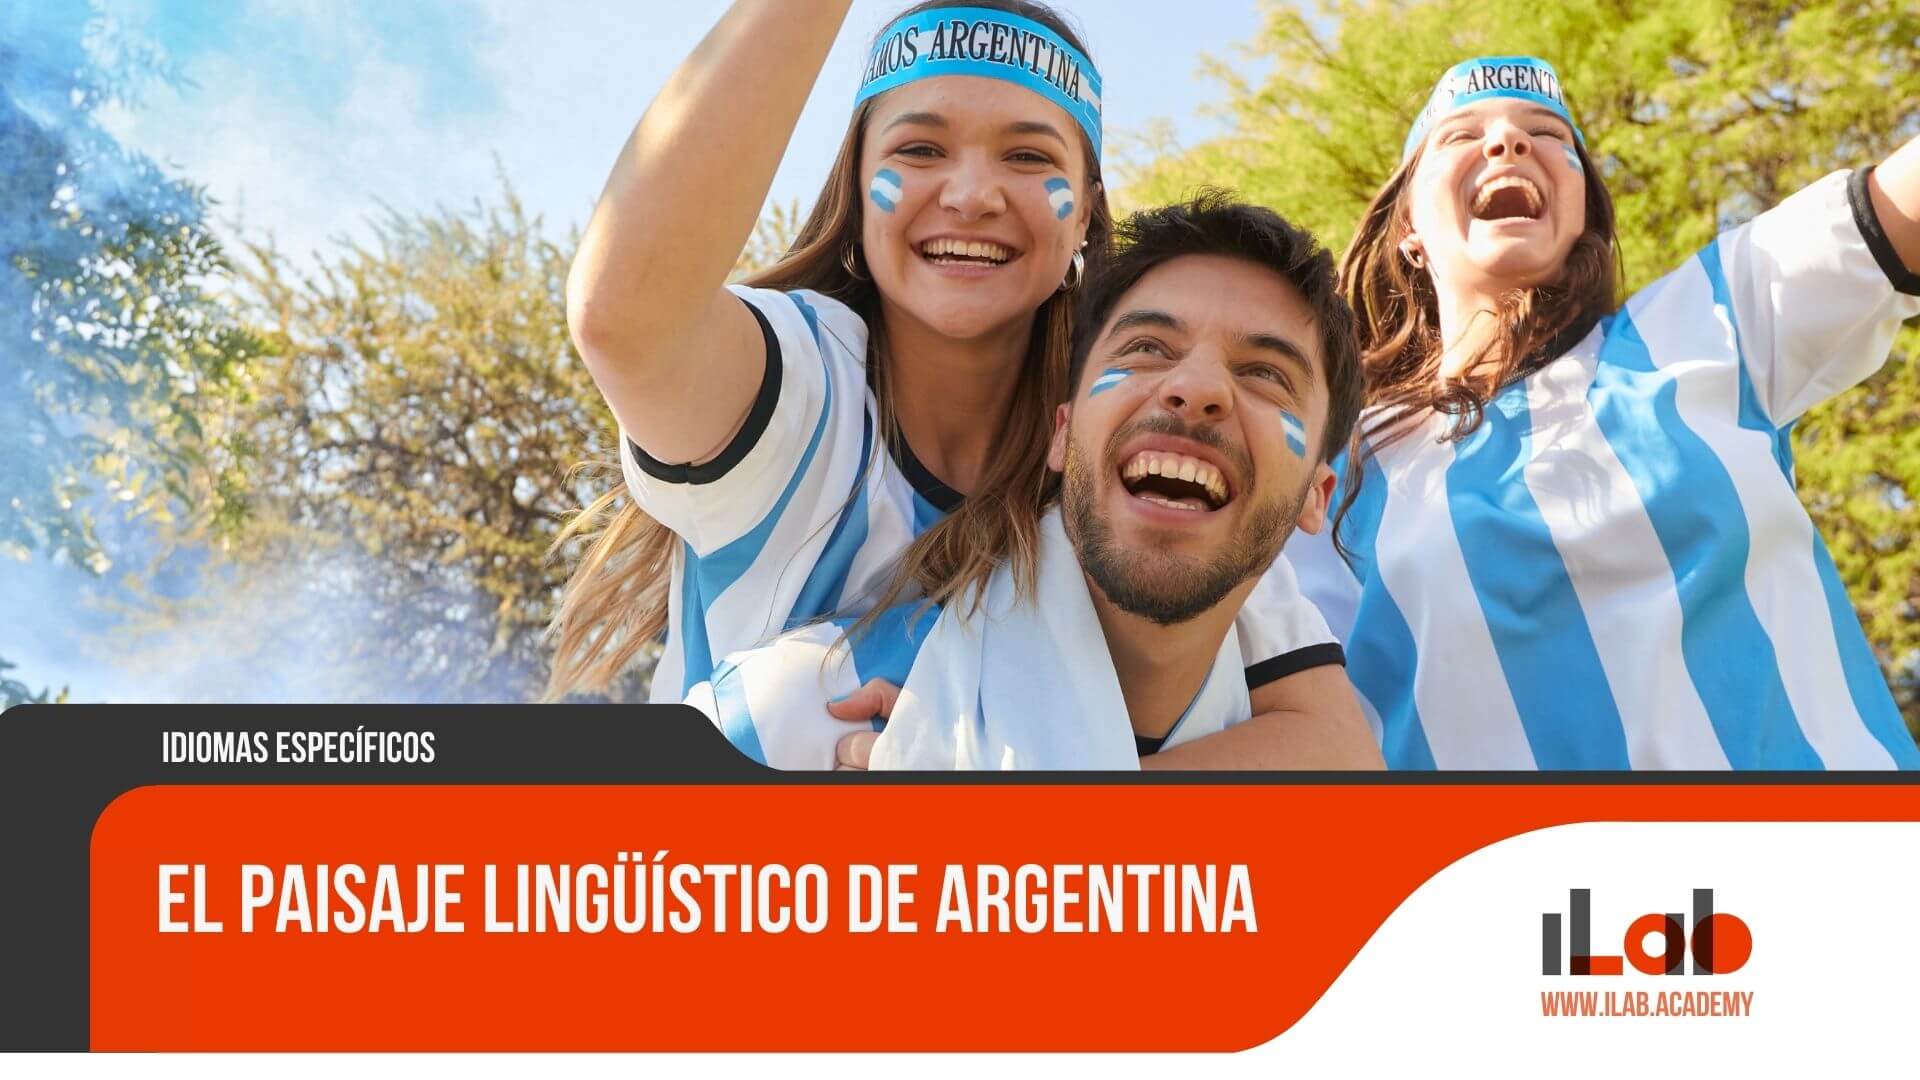 El paisaje lingüístico de Argentina